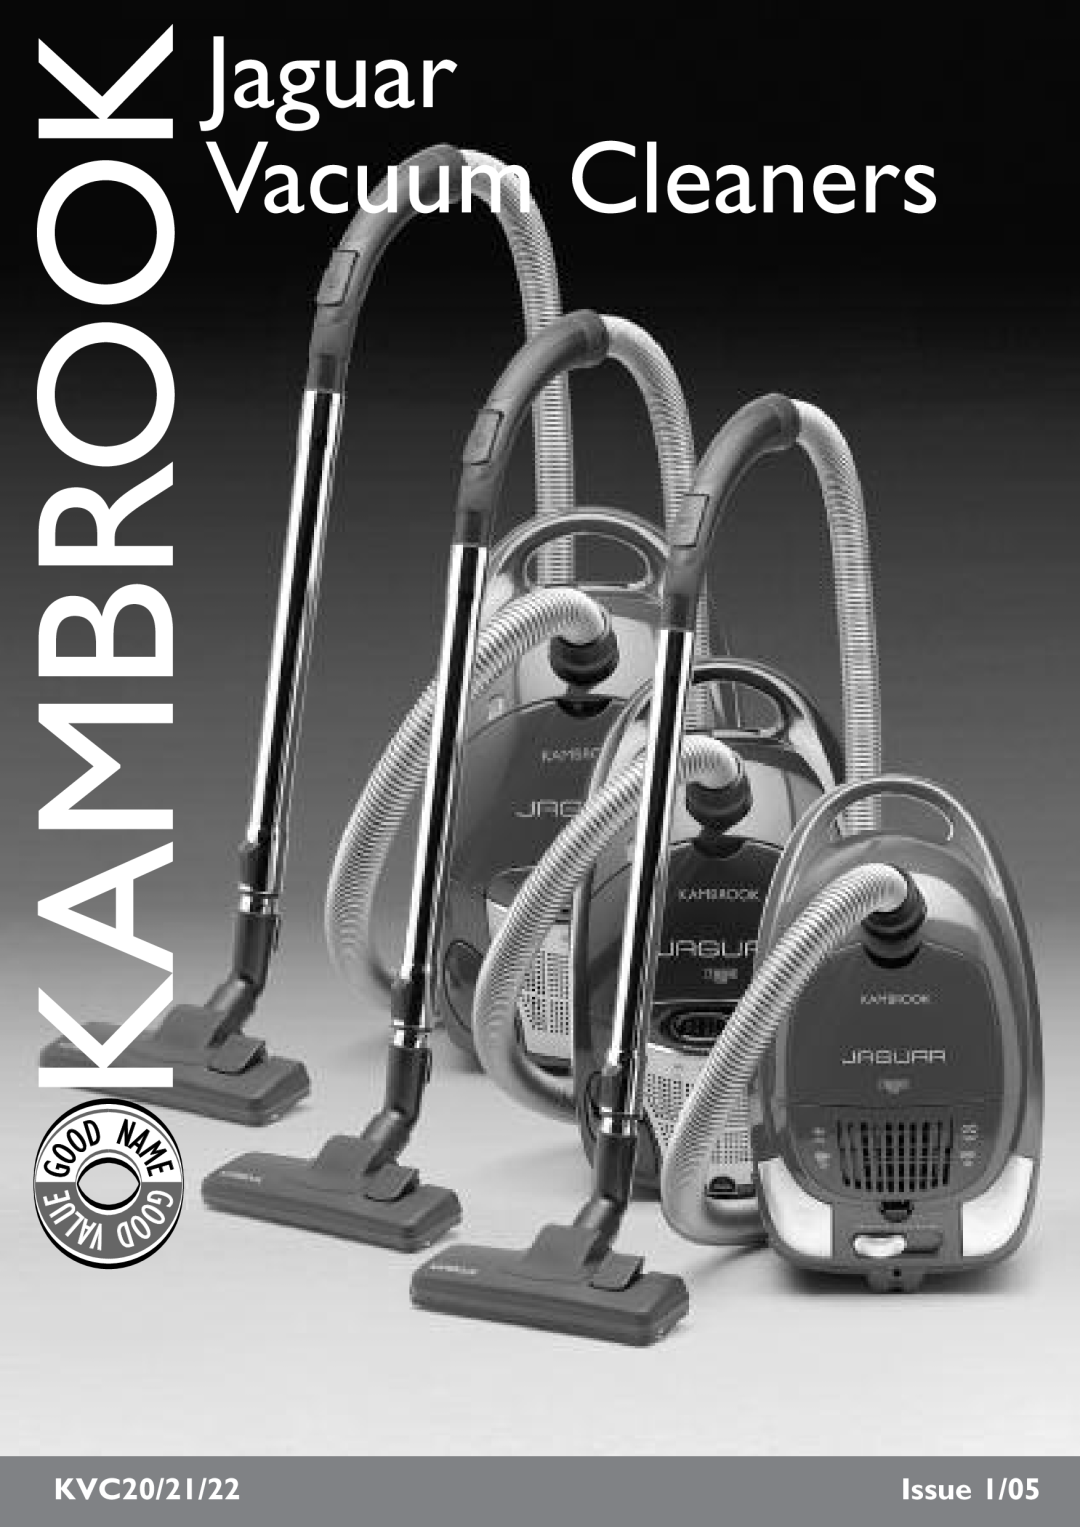 Kambrook manual U Lav, Jaguar Vacuum Cleaners, KVC20/21/22, Issue 1/05 